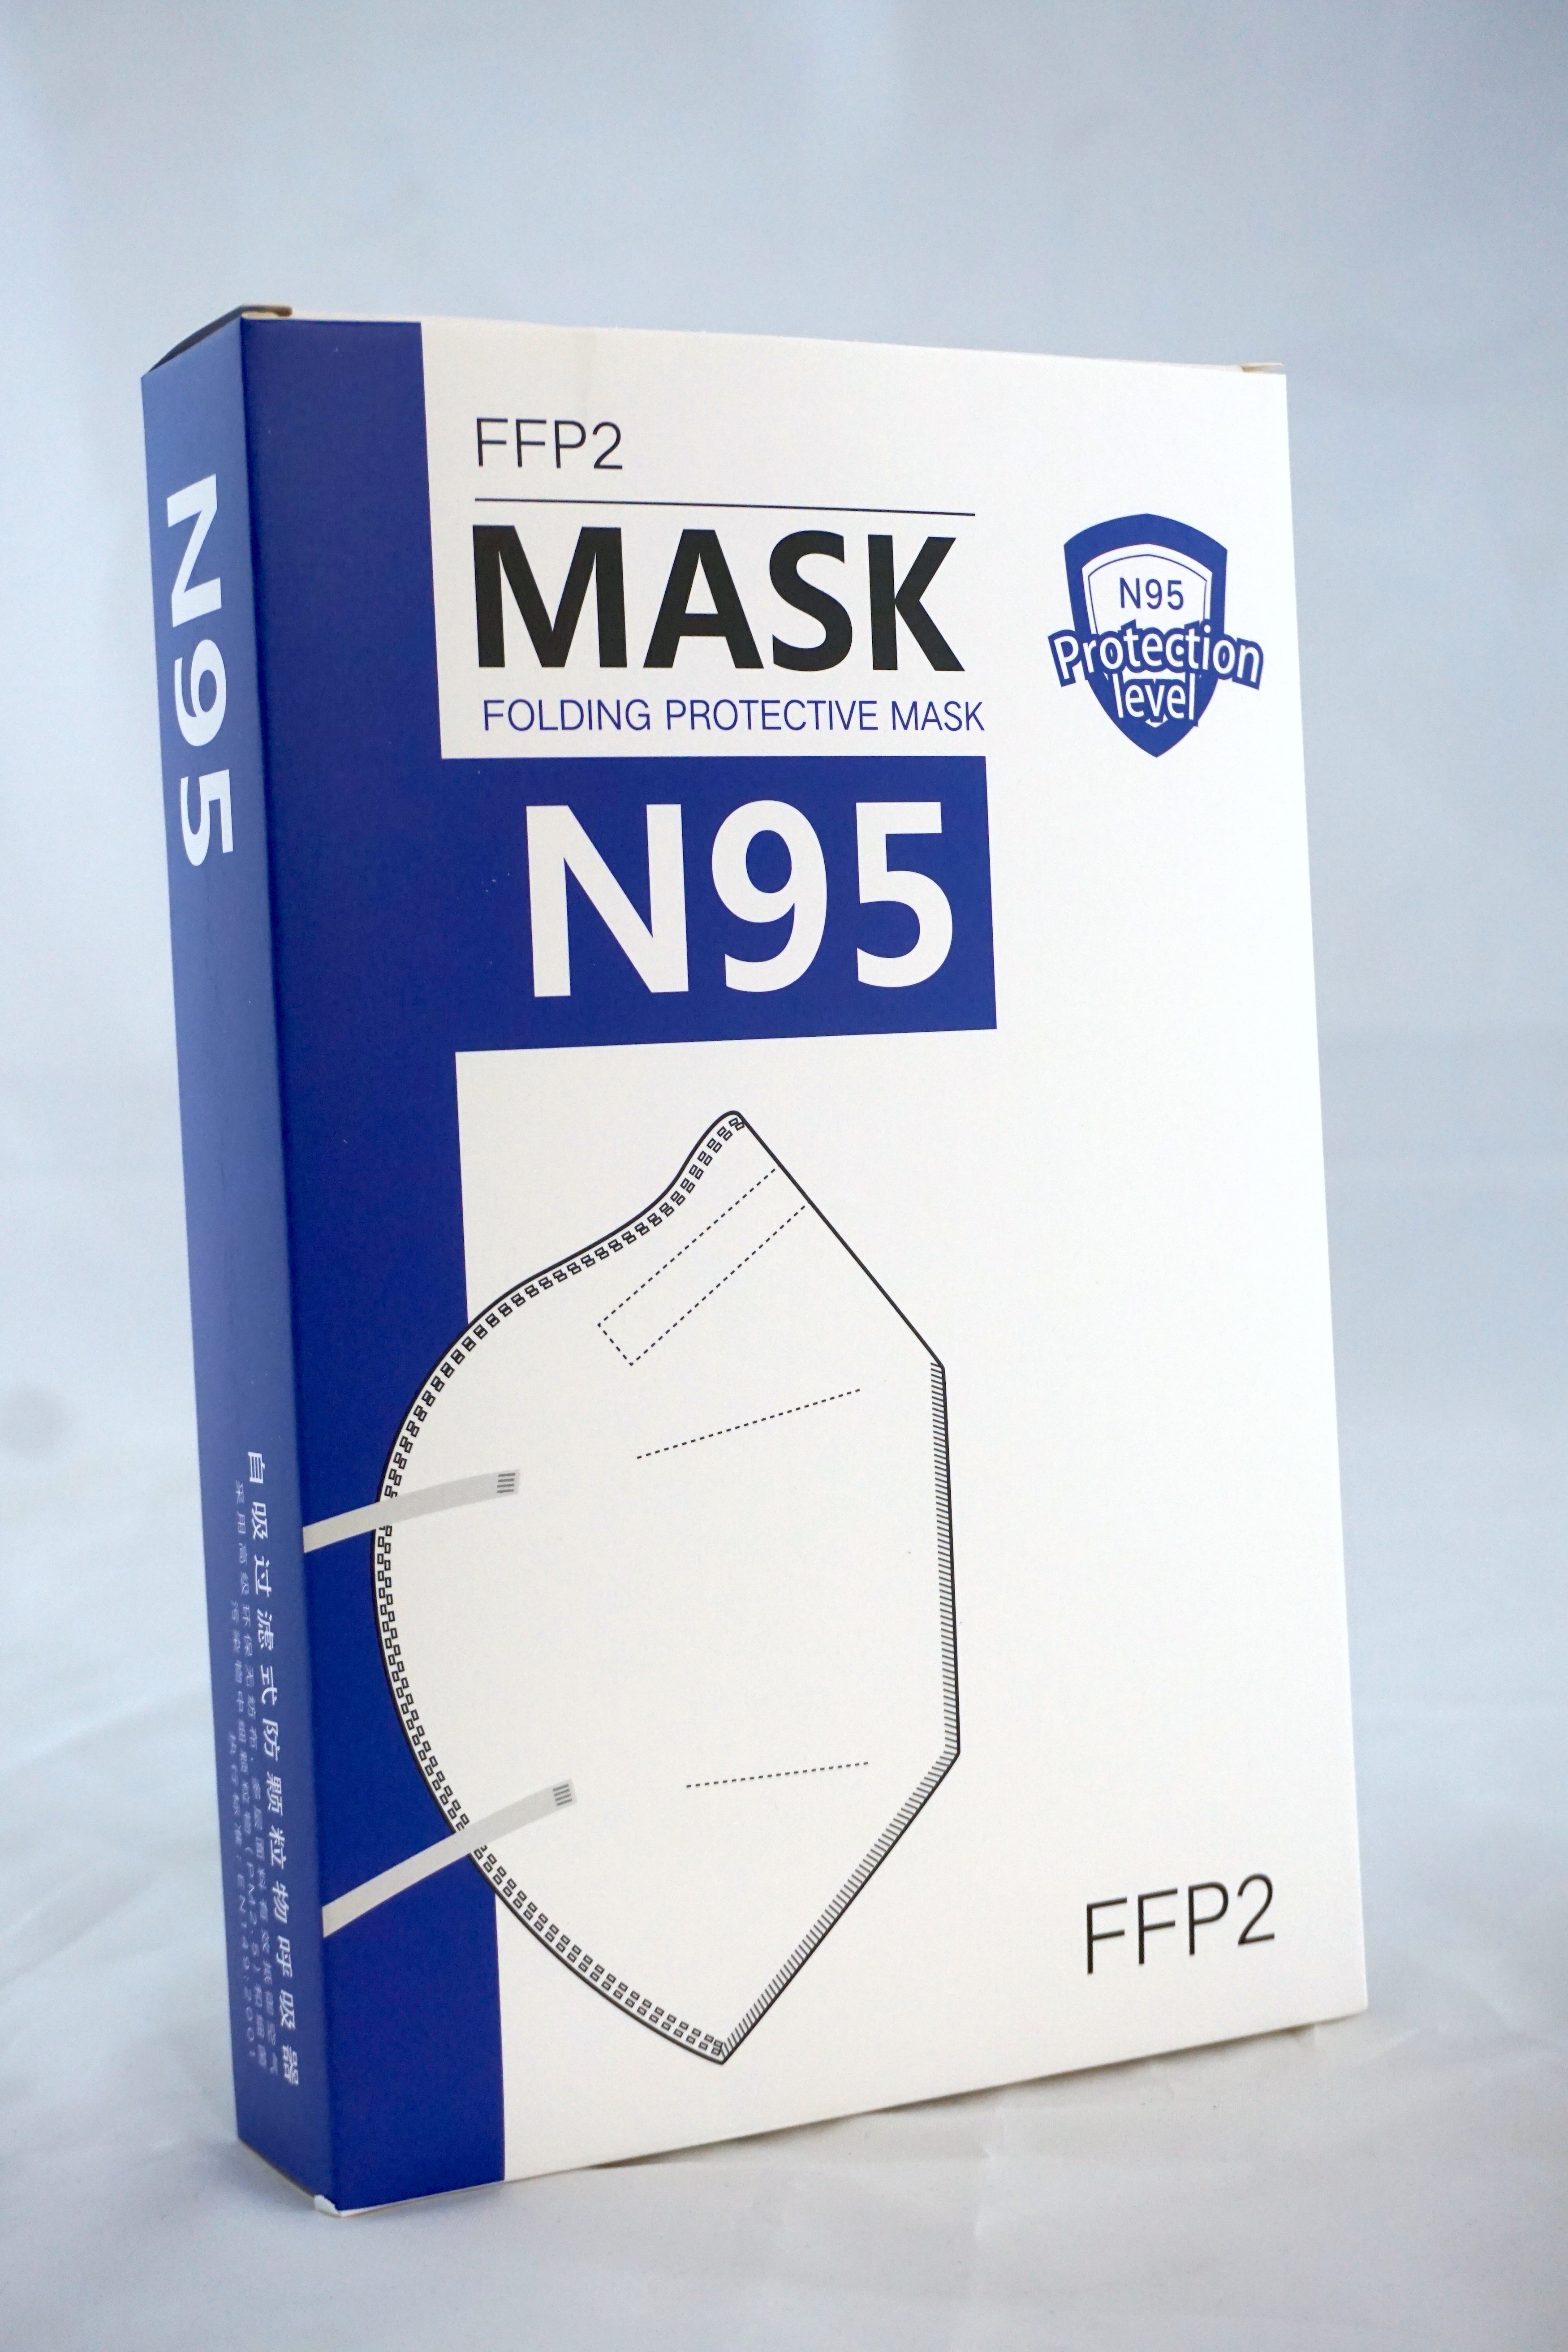 MIR Health FFP2 mask